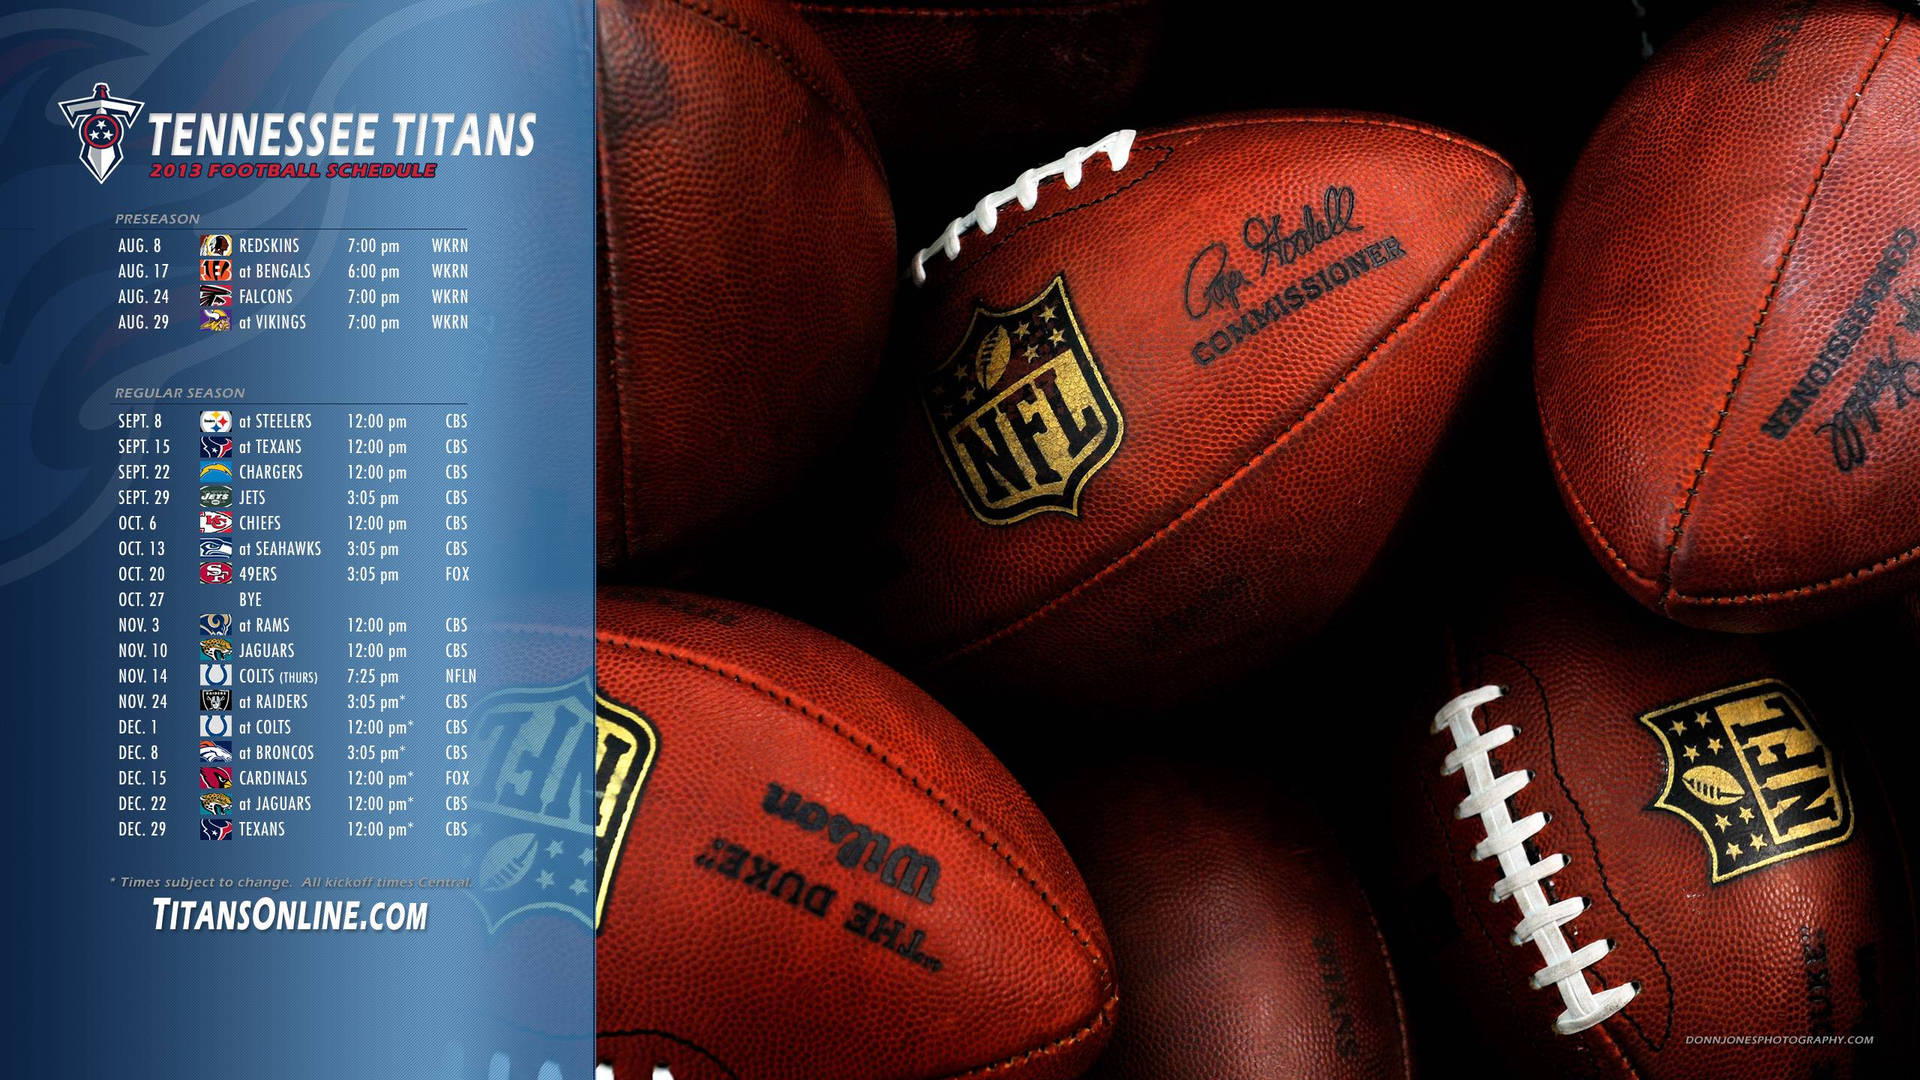 Nflfootballteam: Tennessee Titans Scoreboard Wallpaper